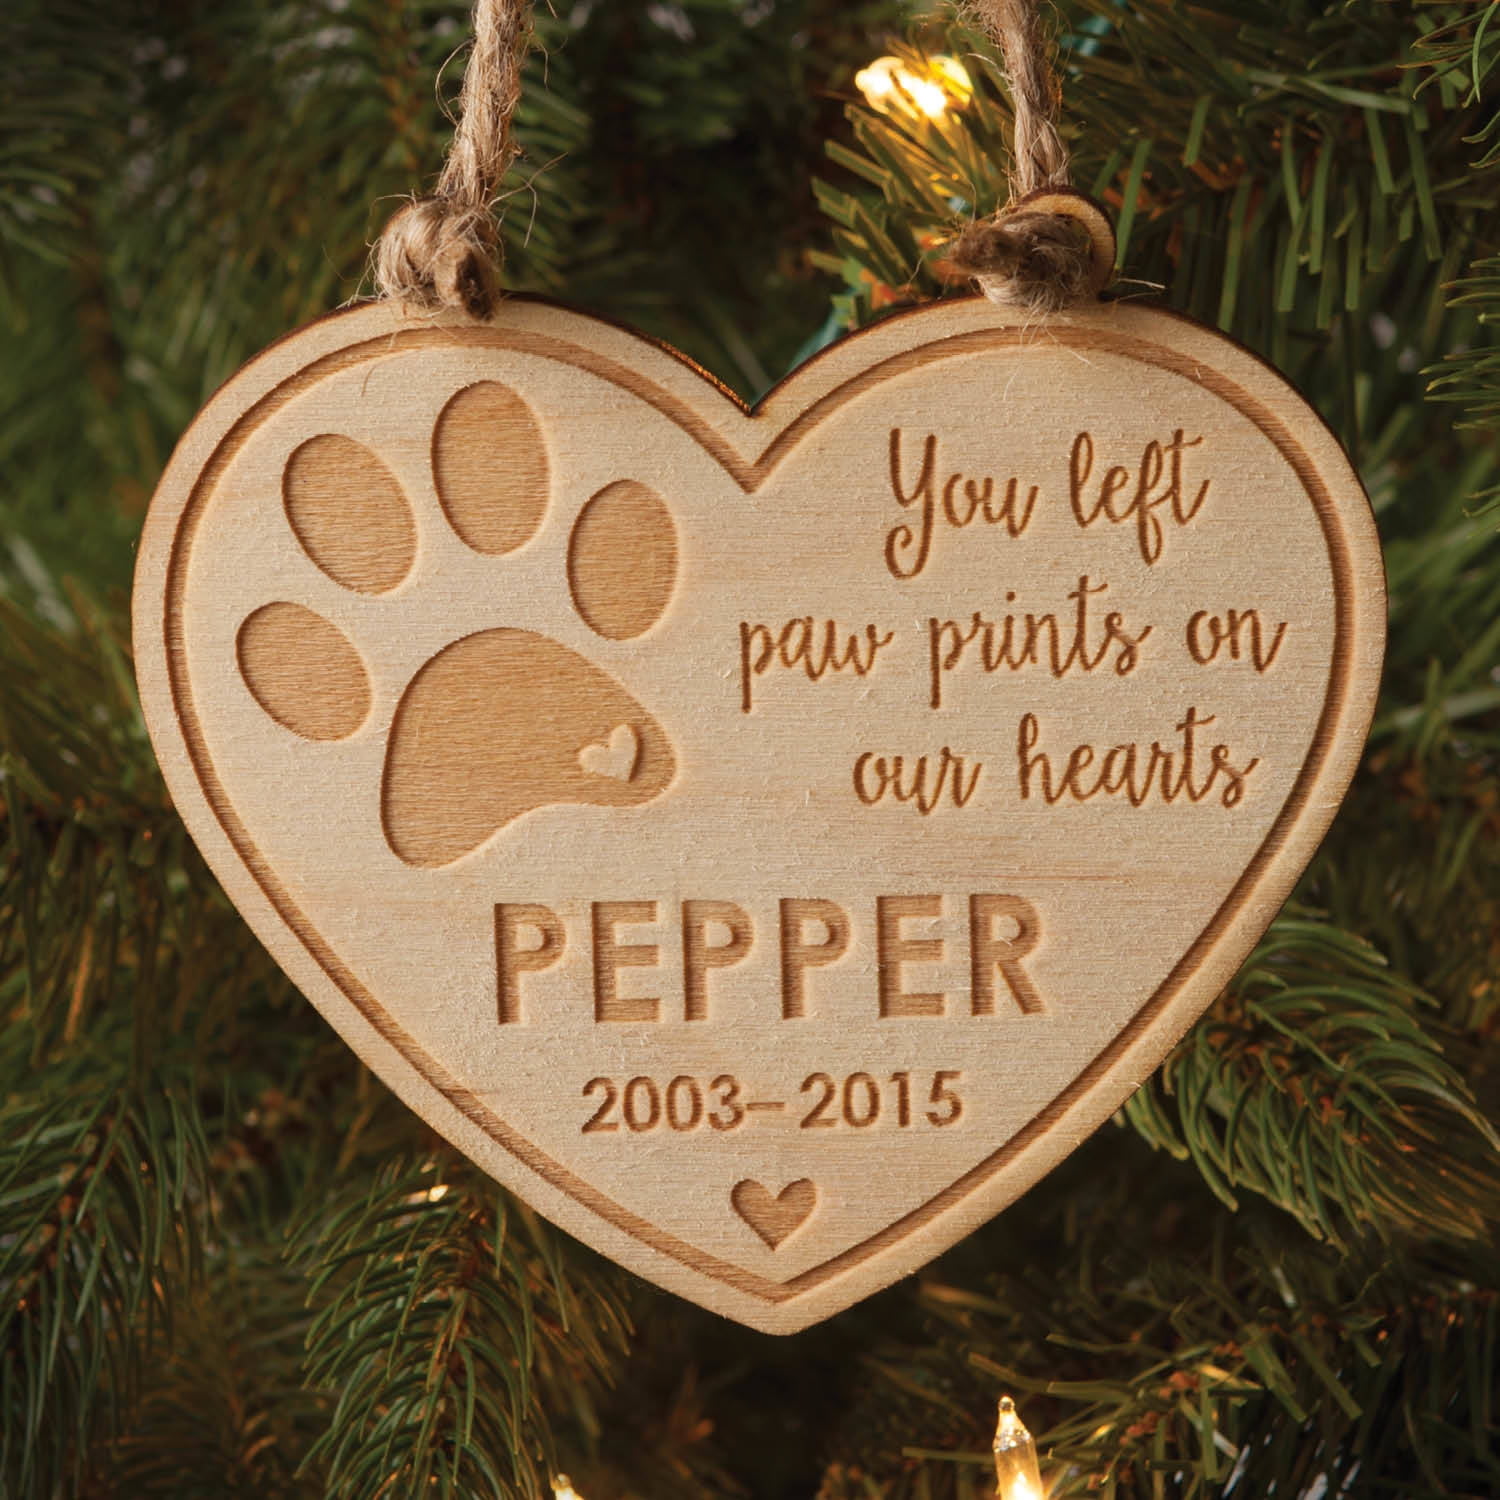 personalized pet ornaments